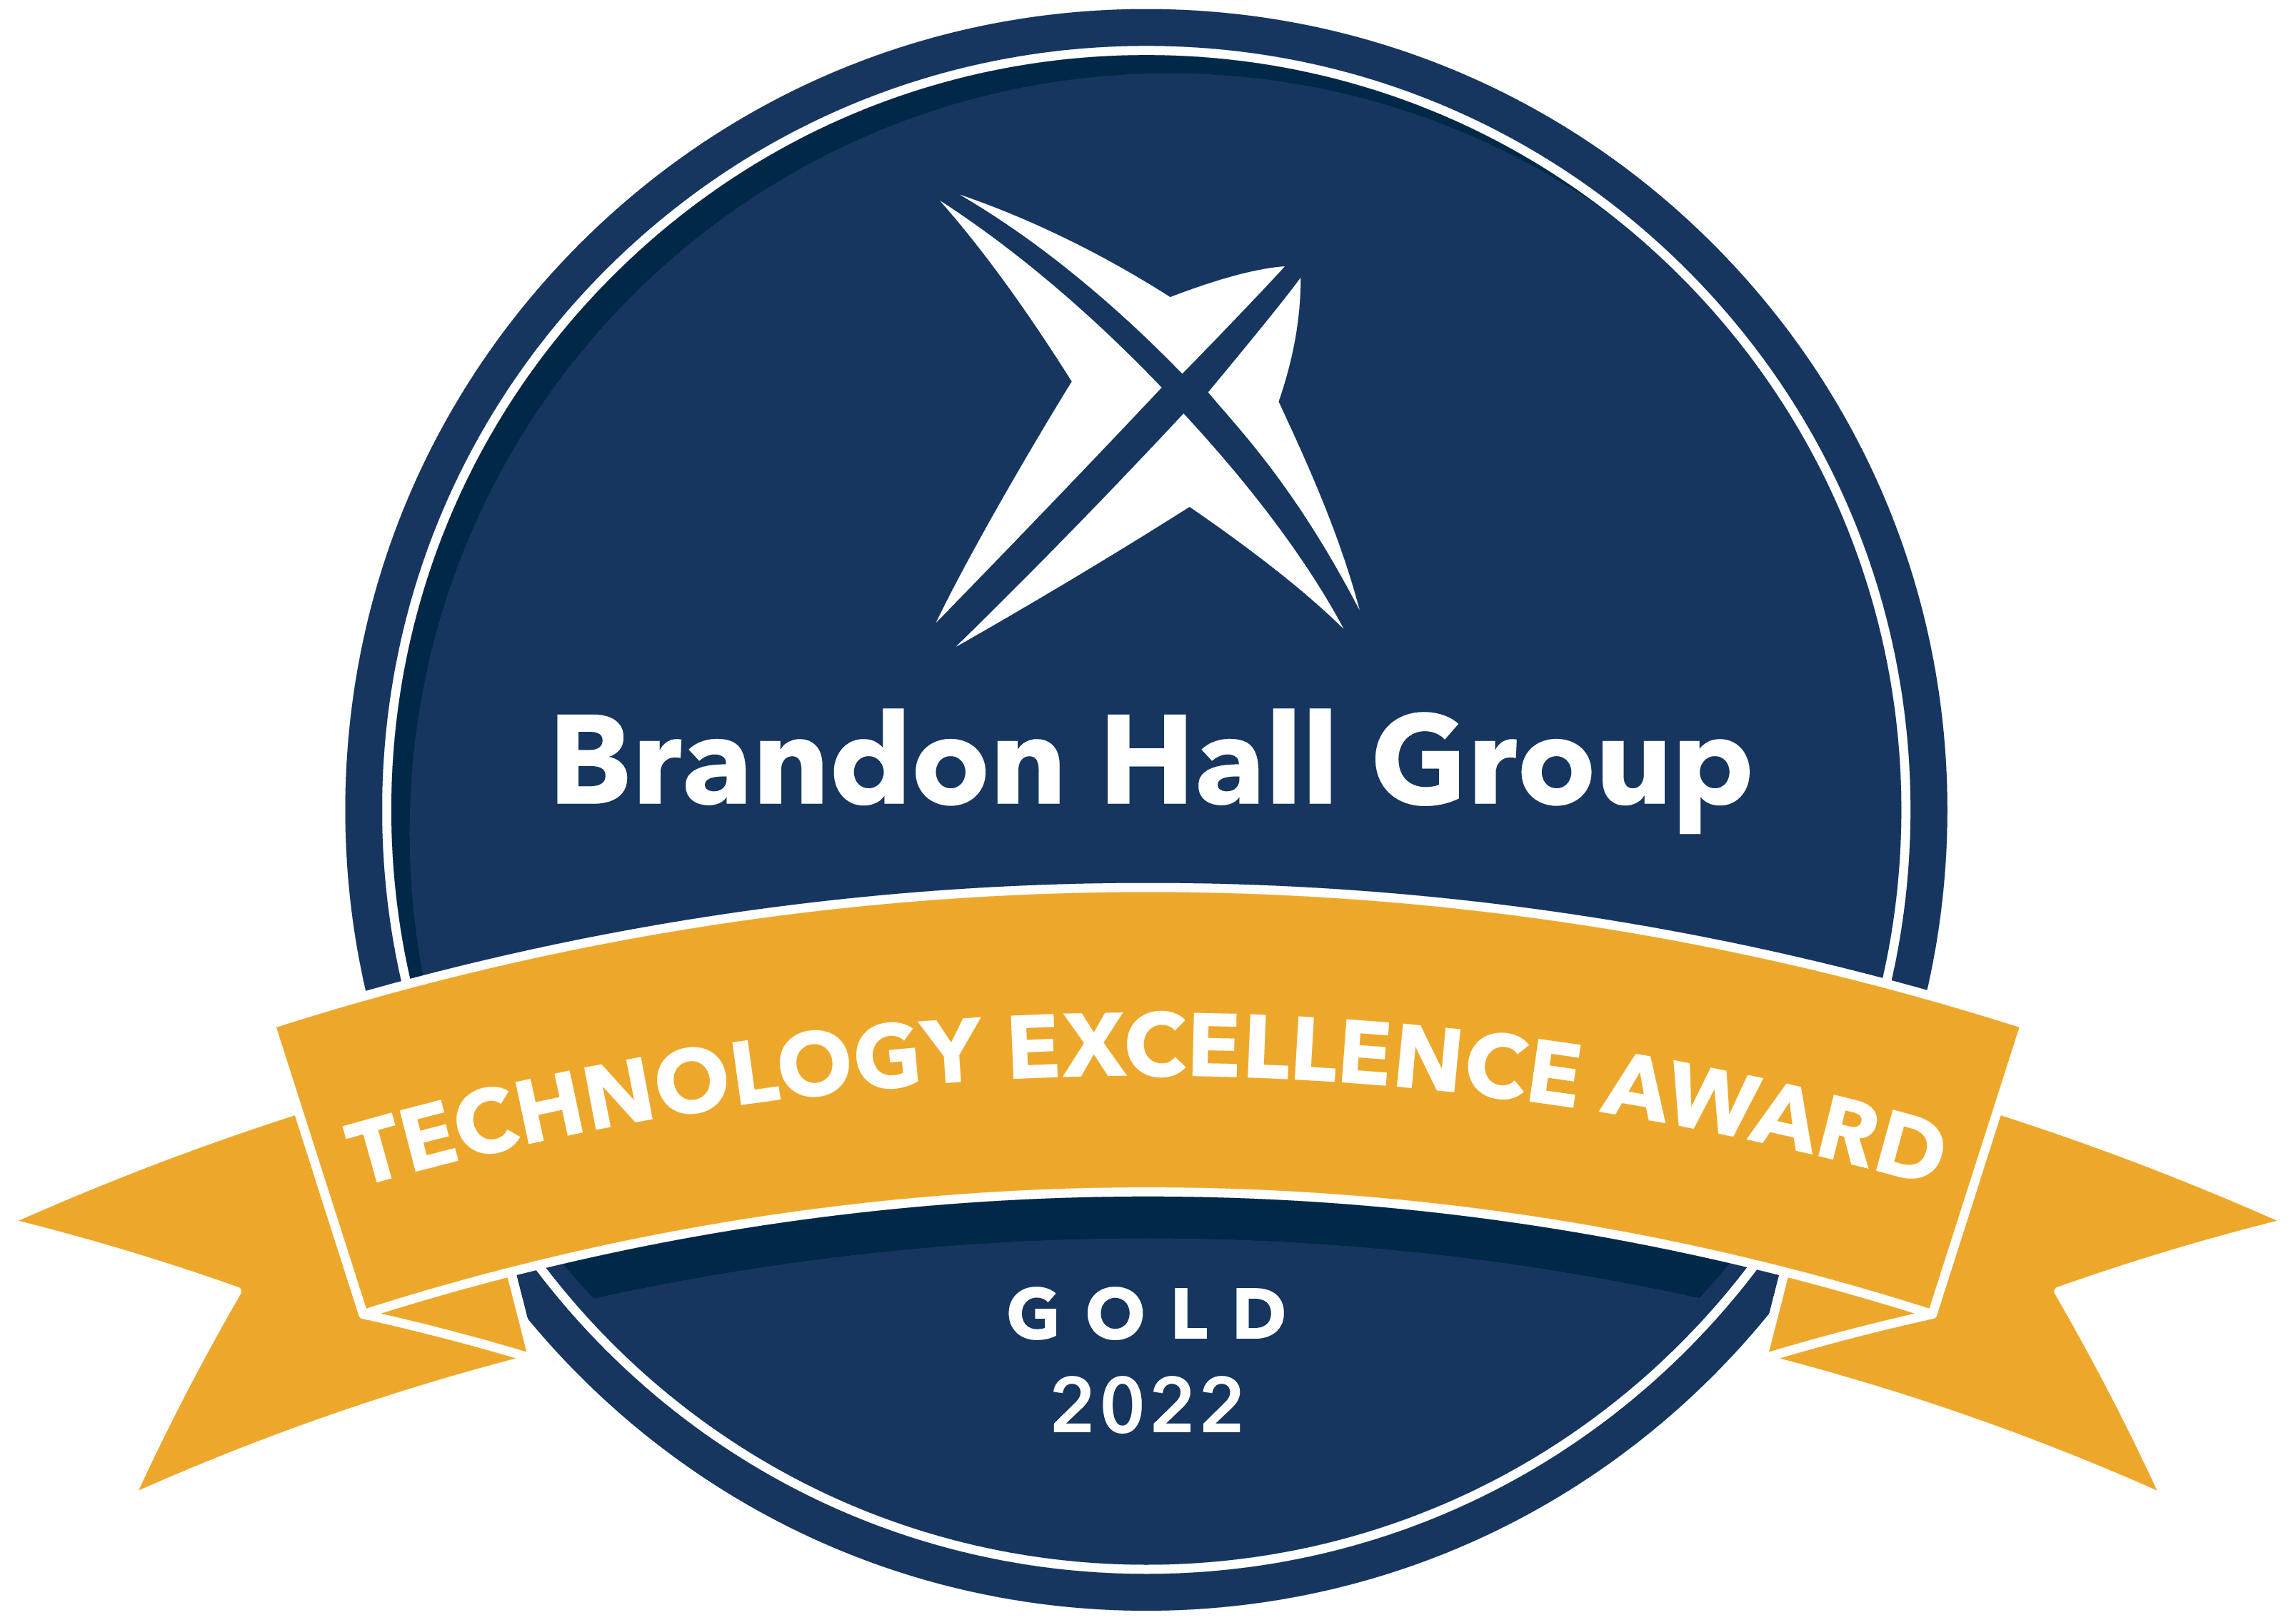 Brandon Hall Group Technology Excellence Award - Gold 2022